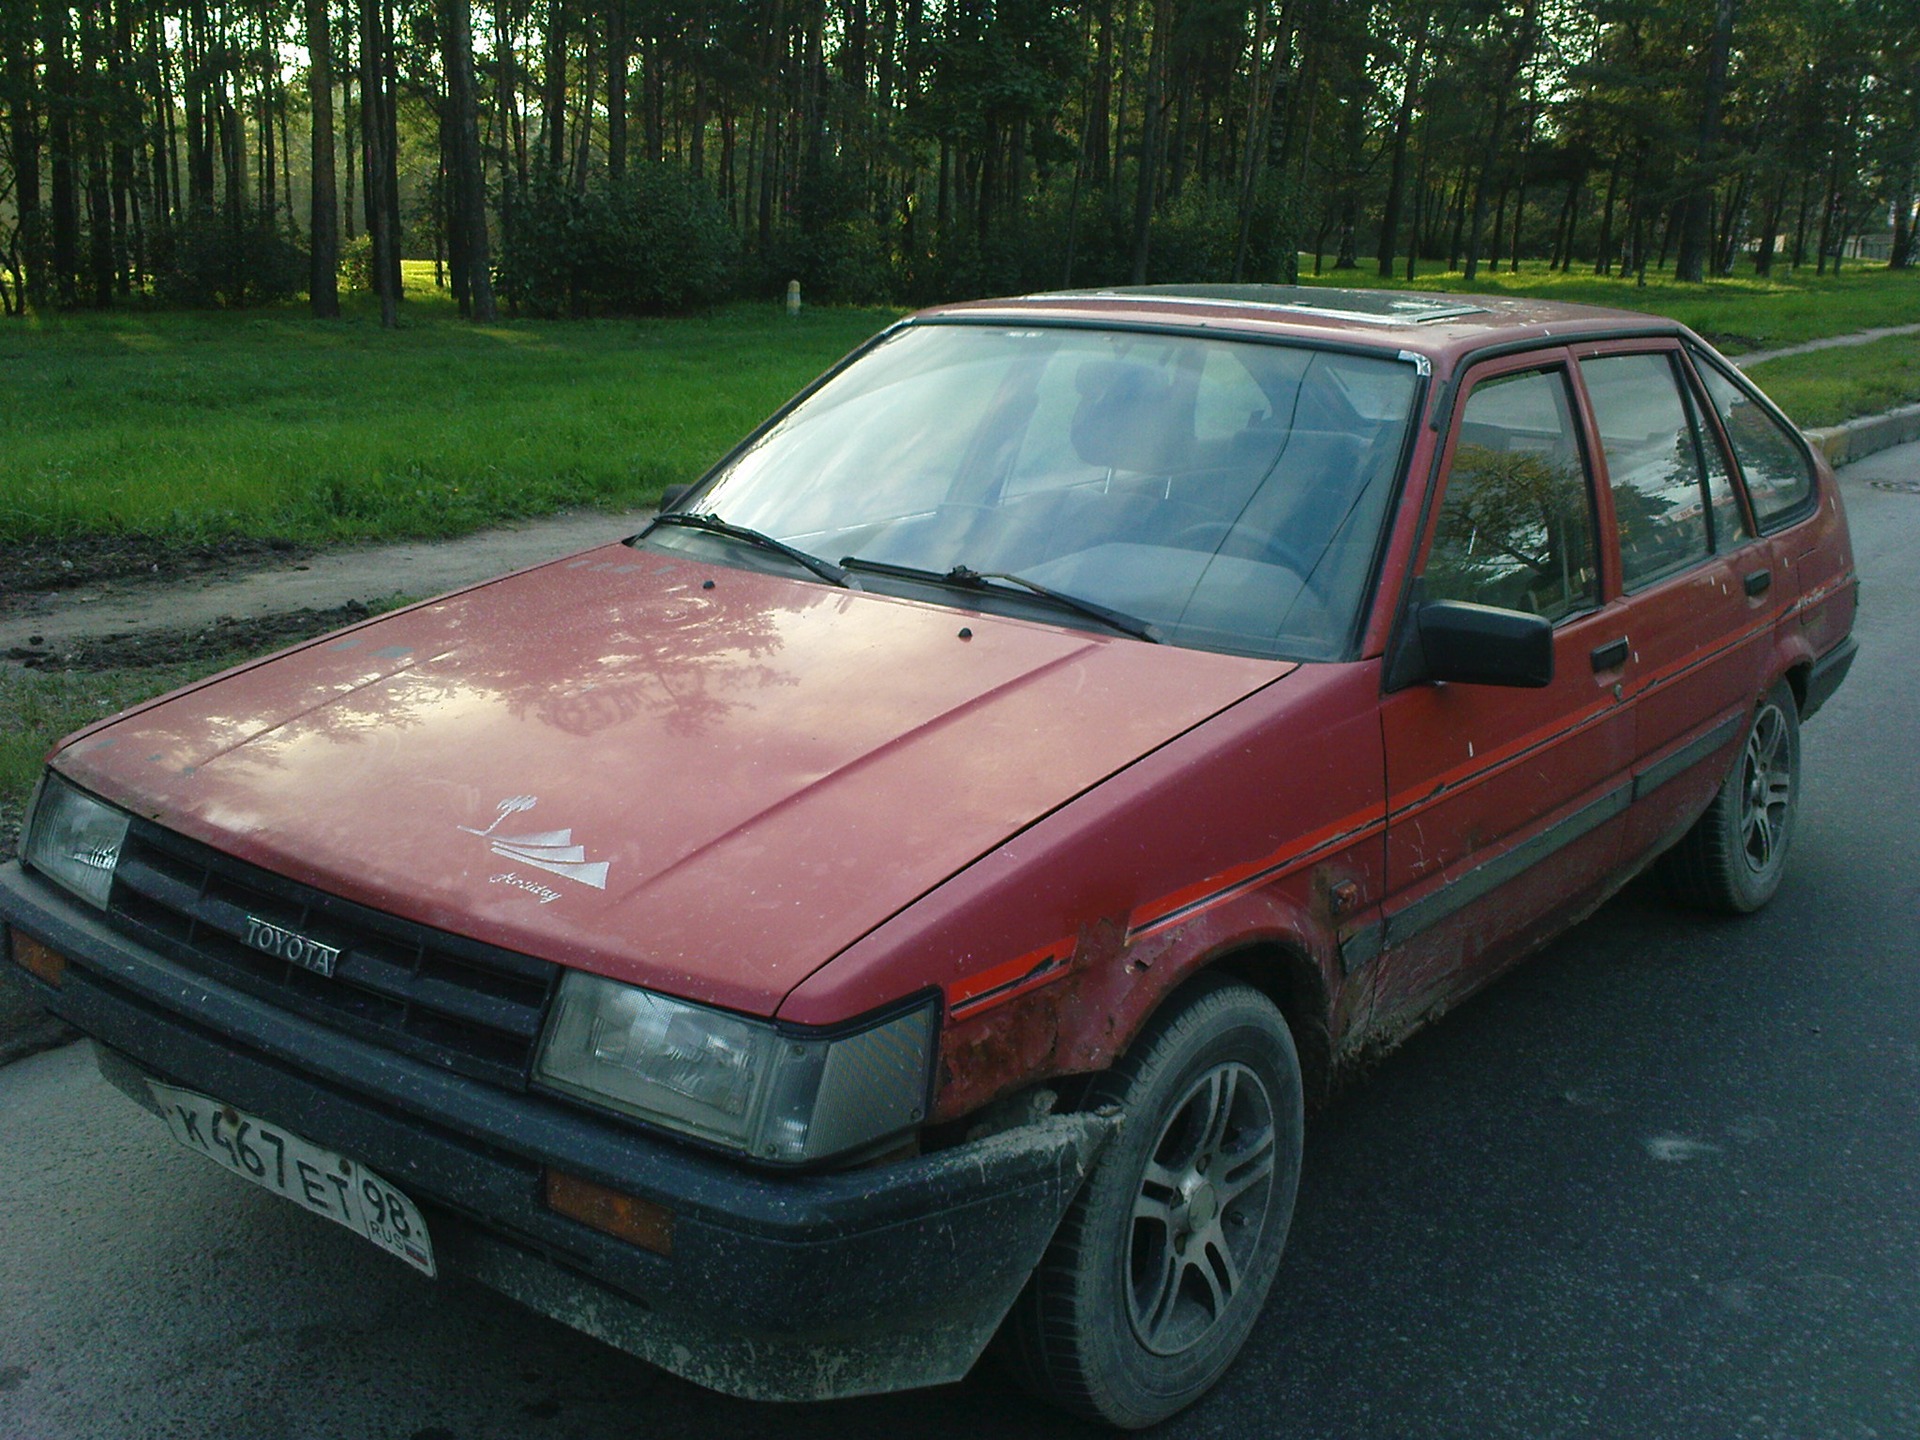       Toyota Corolla 13 1987 